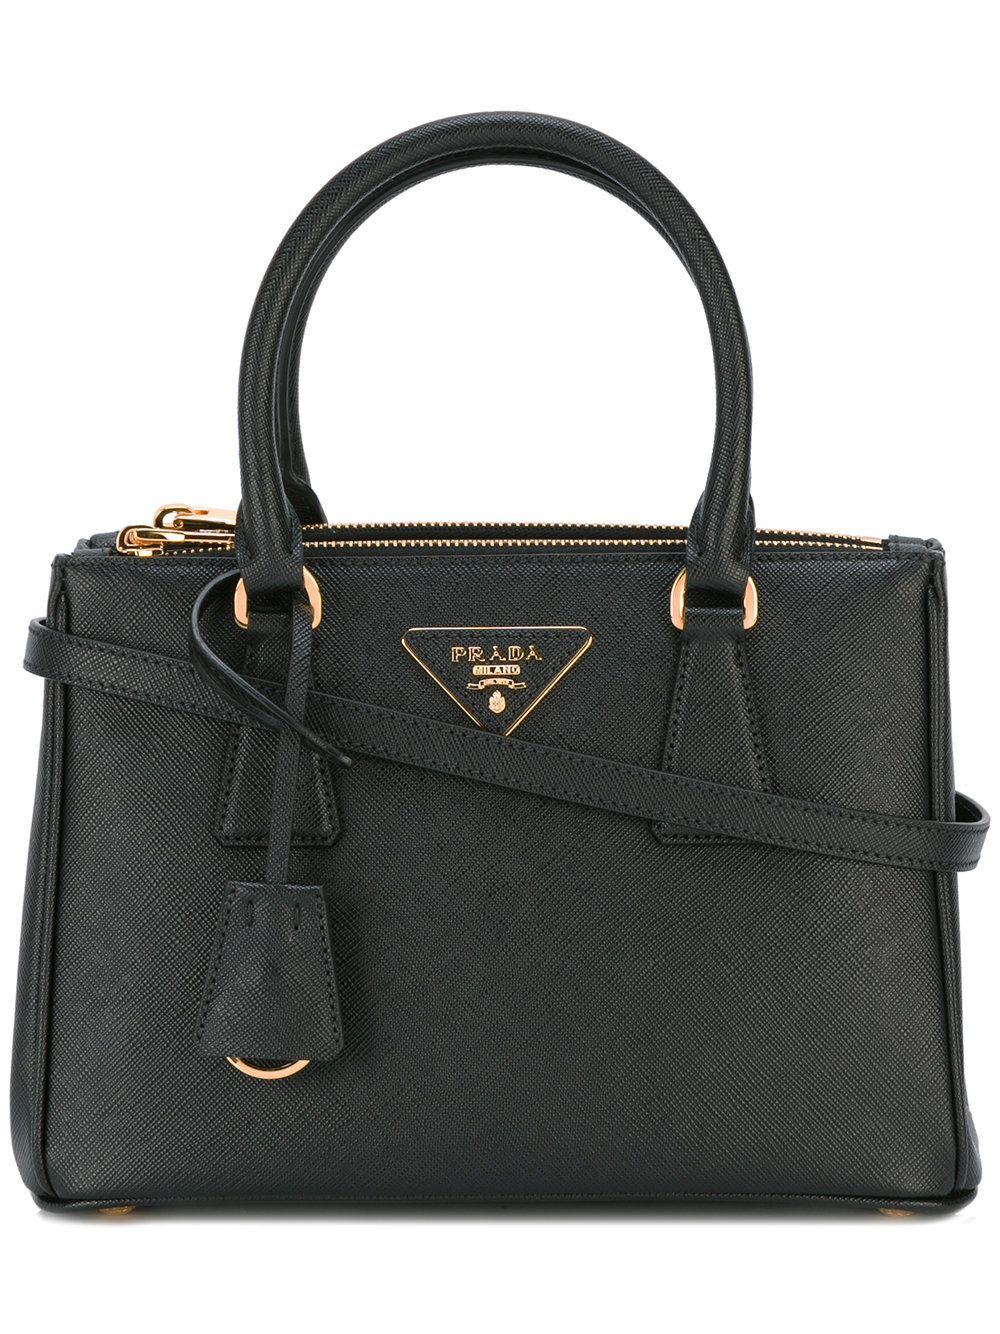 Prada Black Leather Handbag in Black - Lyst